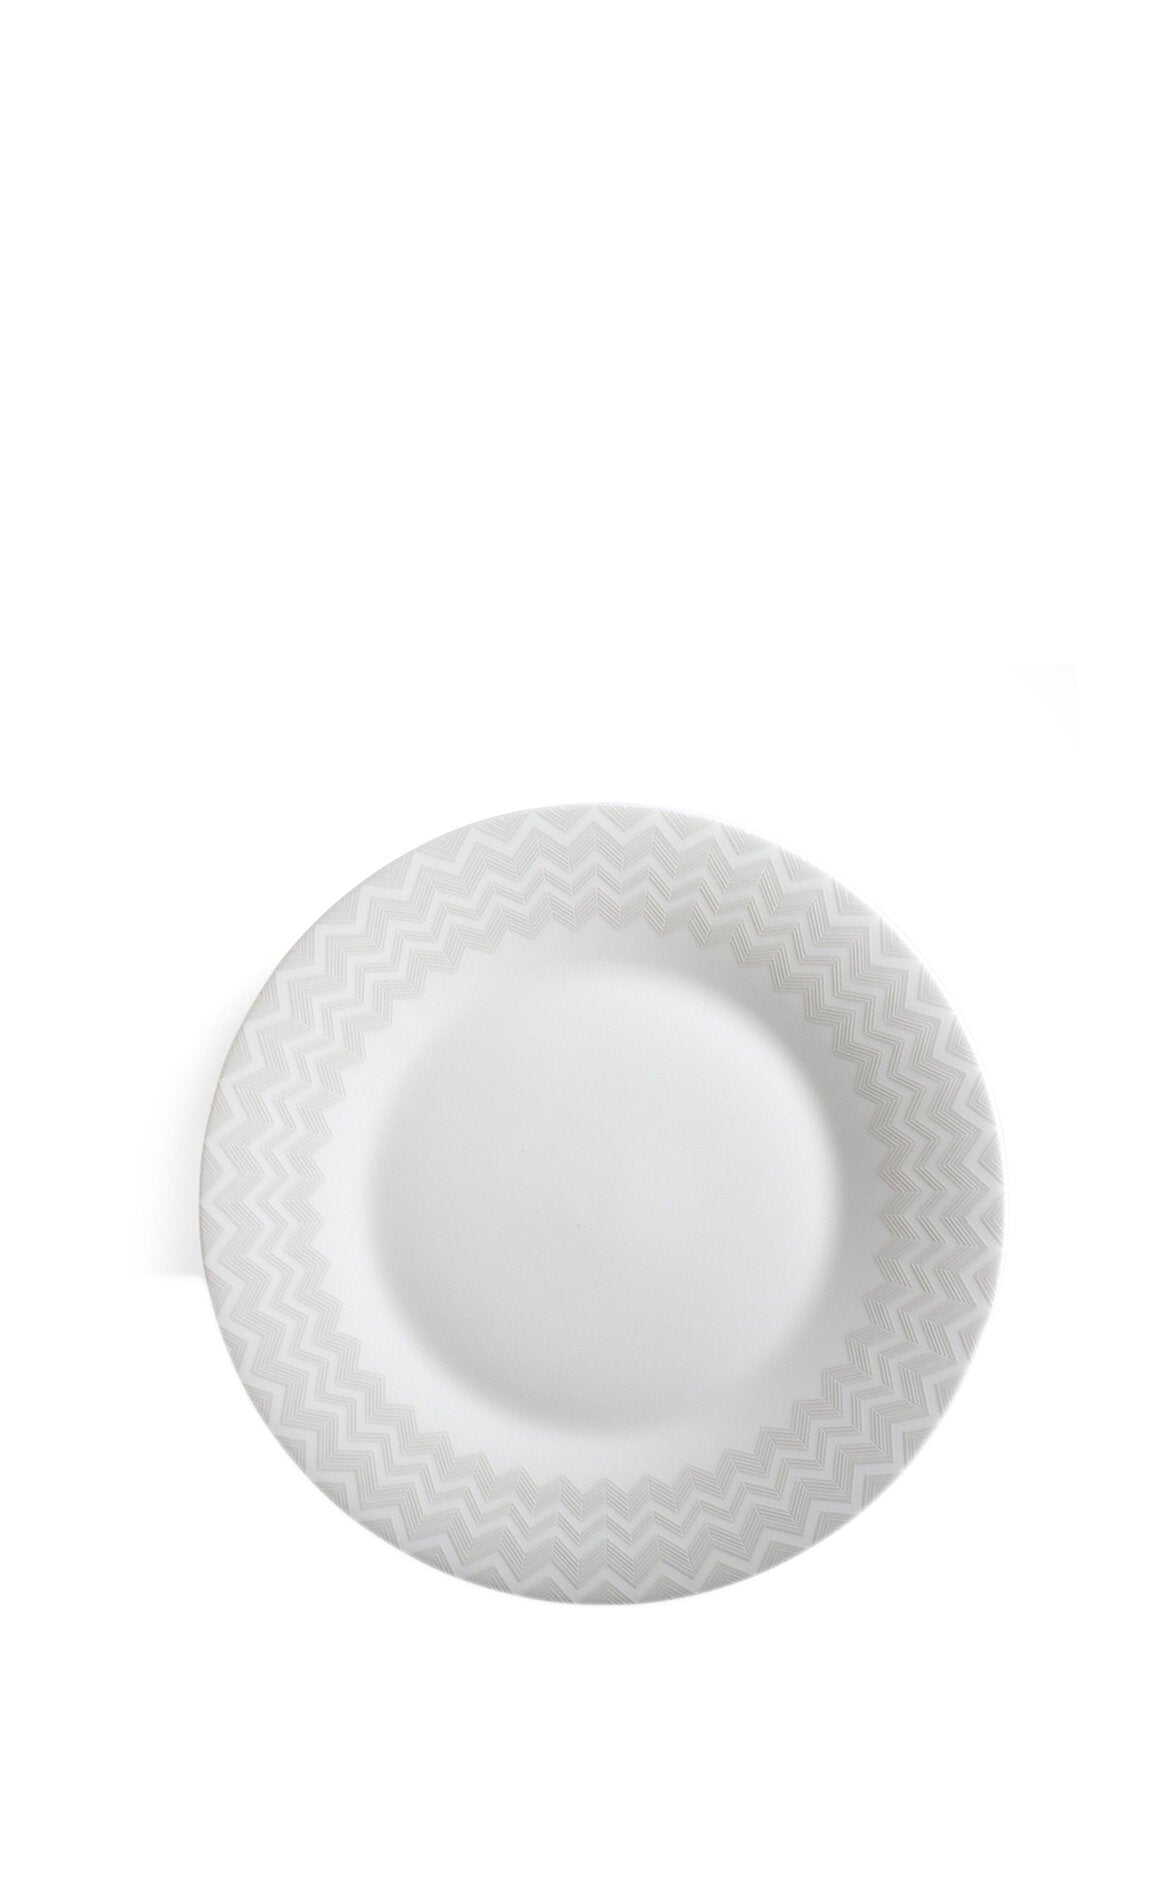 MISSONI HOME Zig Zag White Beyaz Gri, Yemek Tabağı 27,5 cm D’Maison 